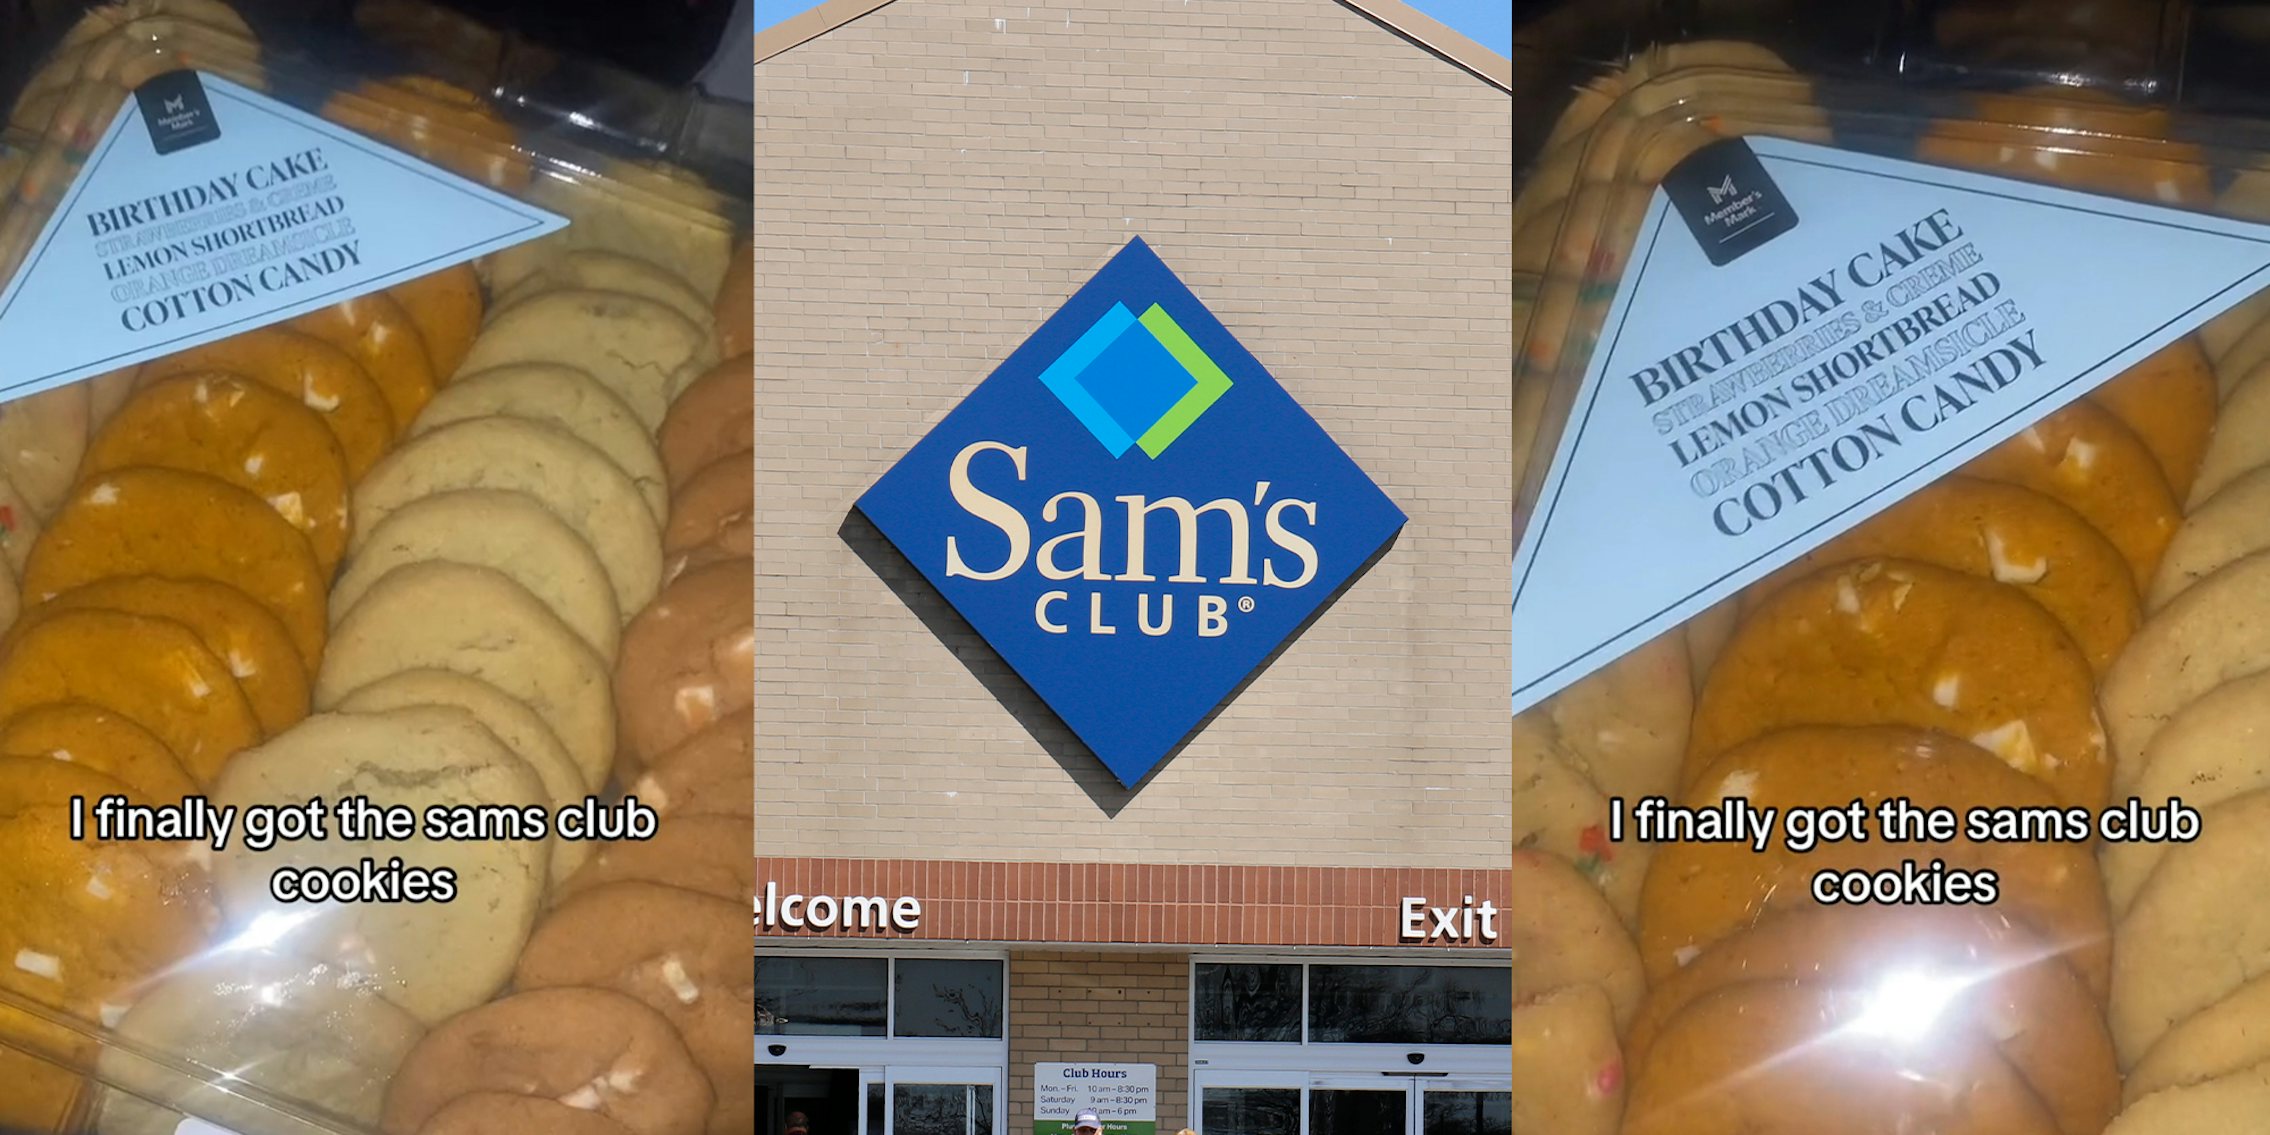 Sam's Club customer buys viral $20 cookies